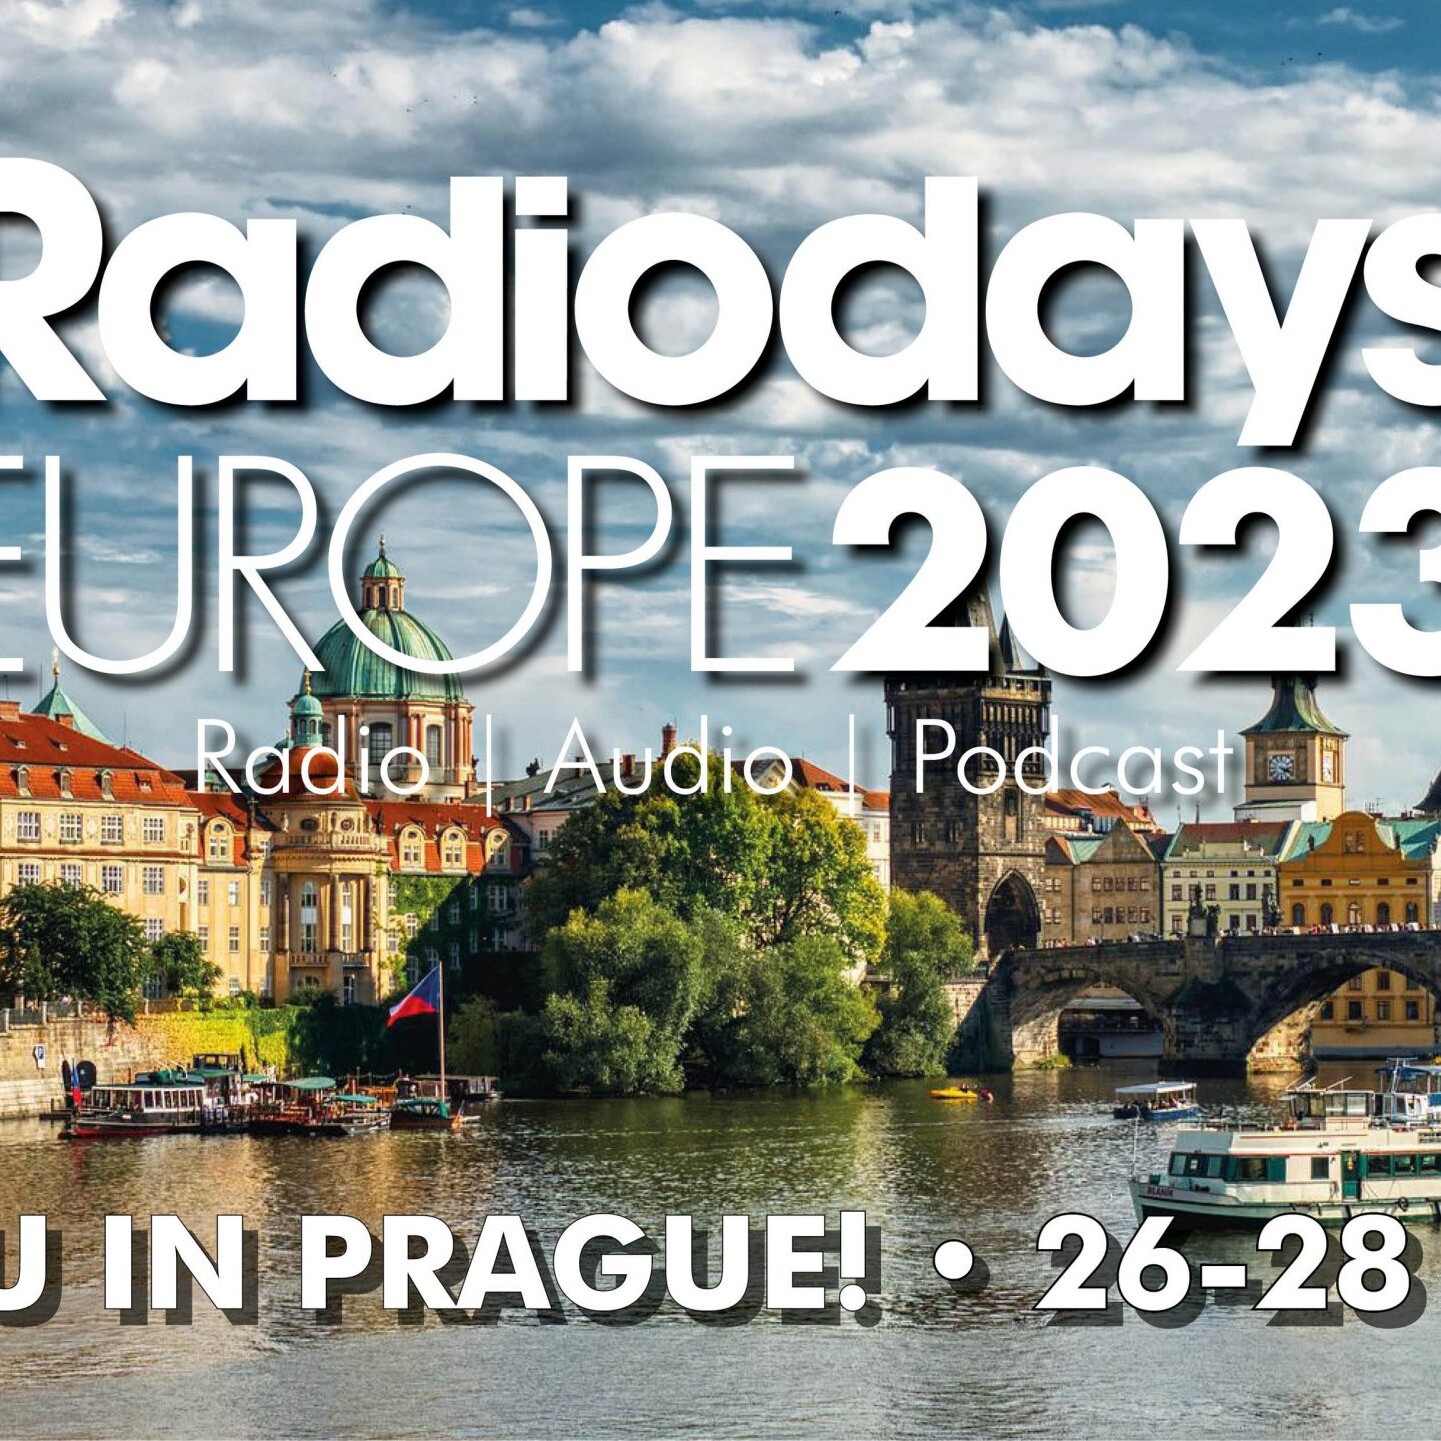 Radiodays Europe 2023. Credit: Radiodays.